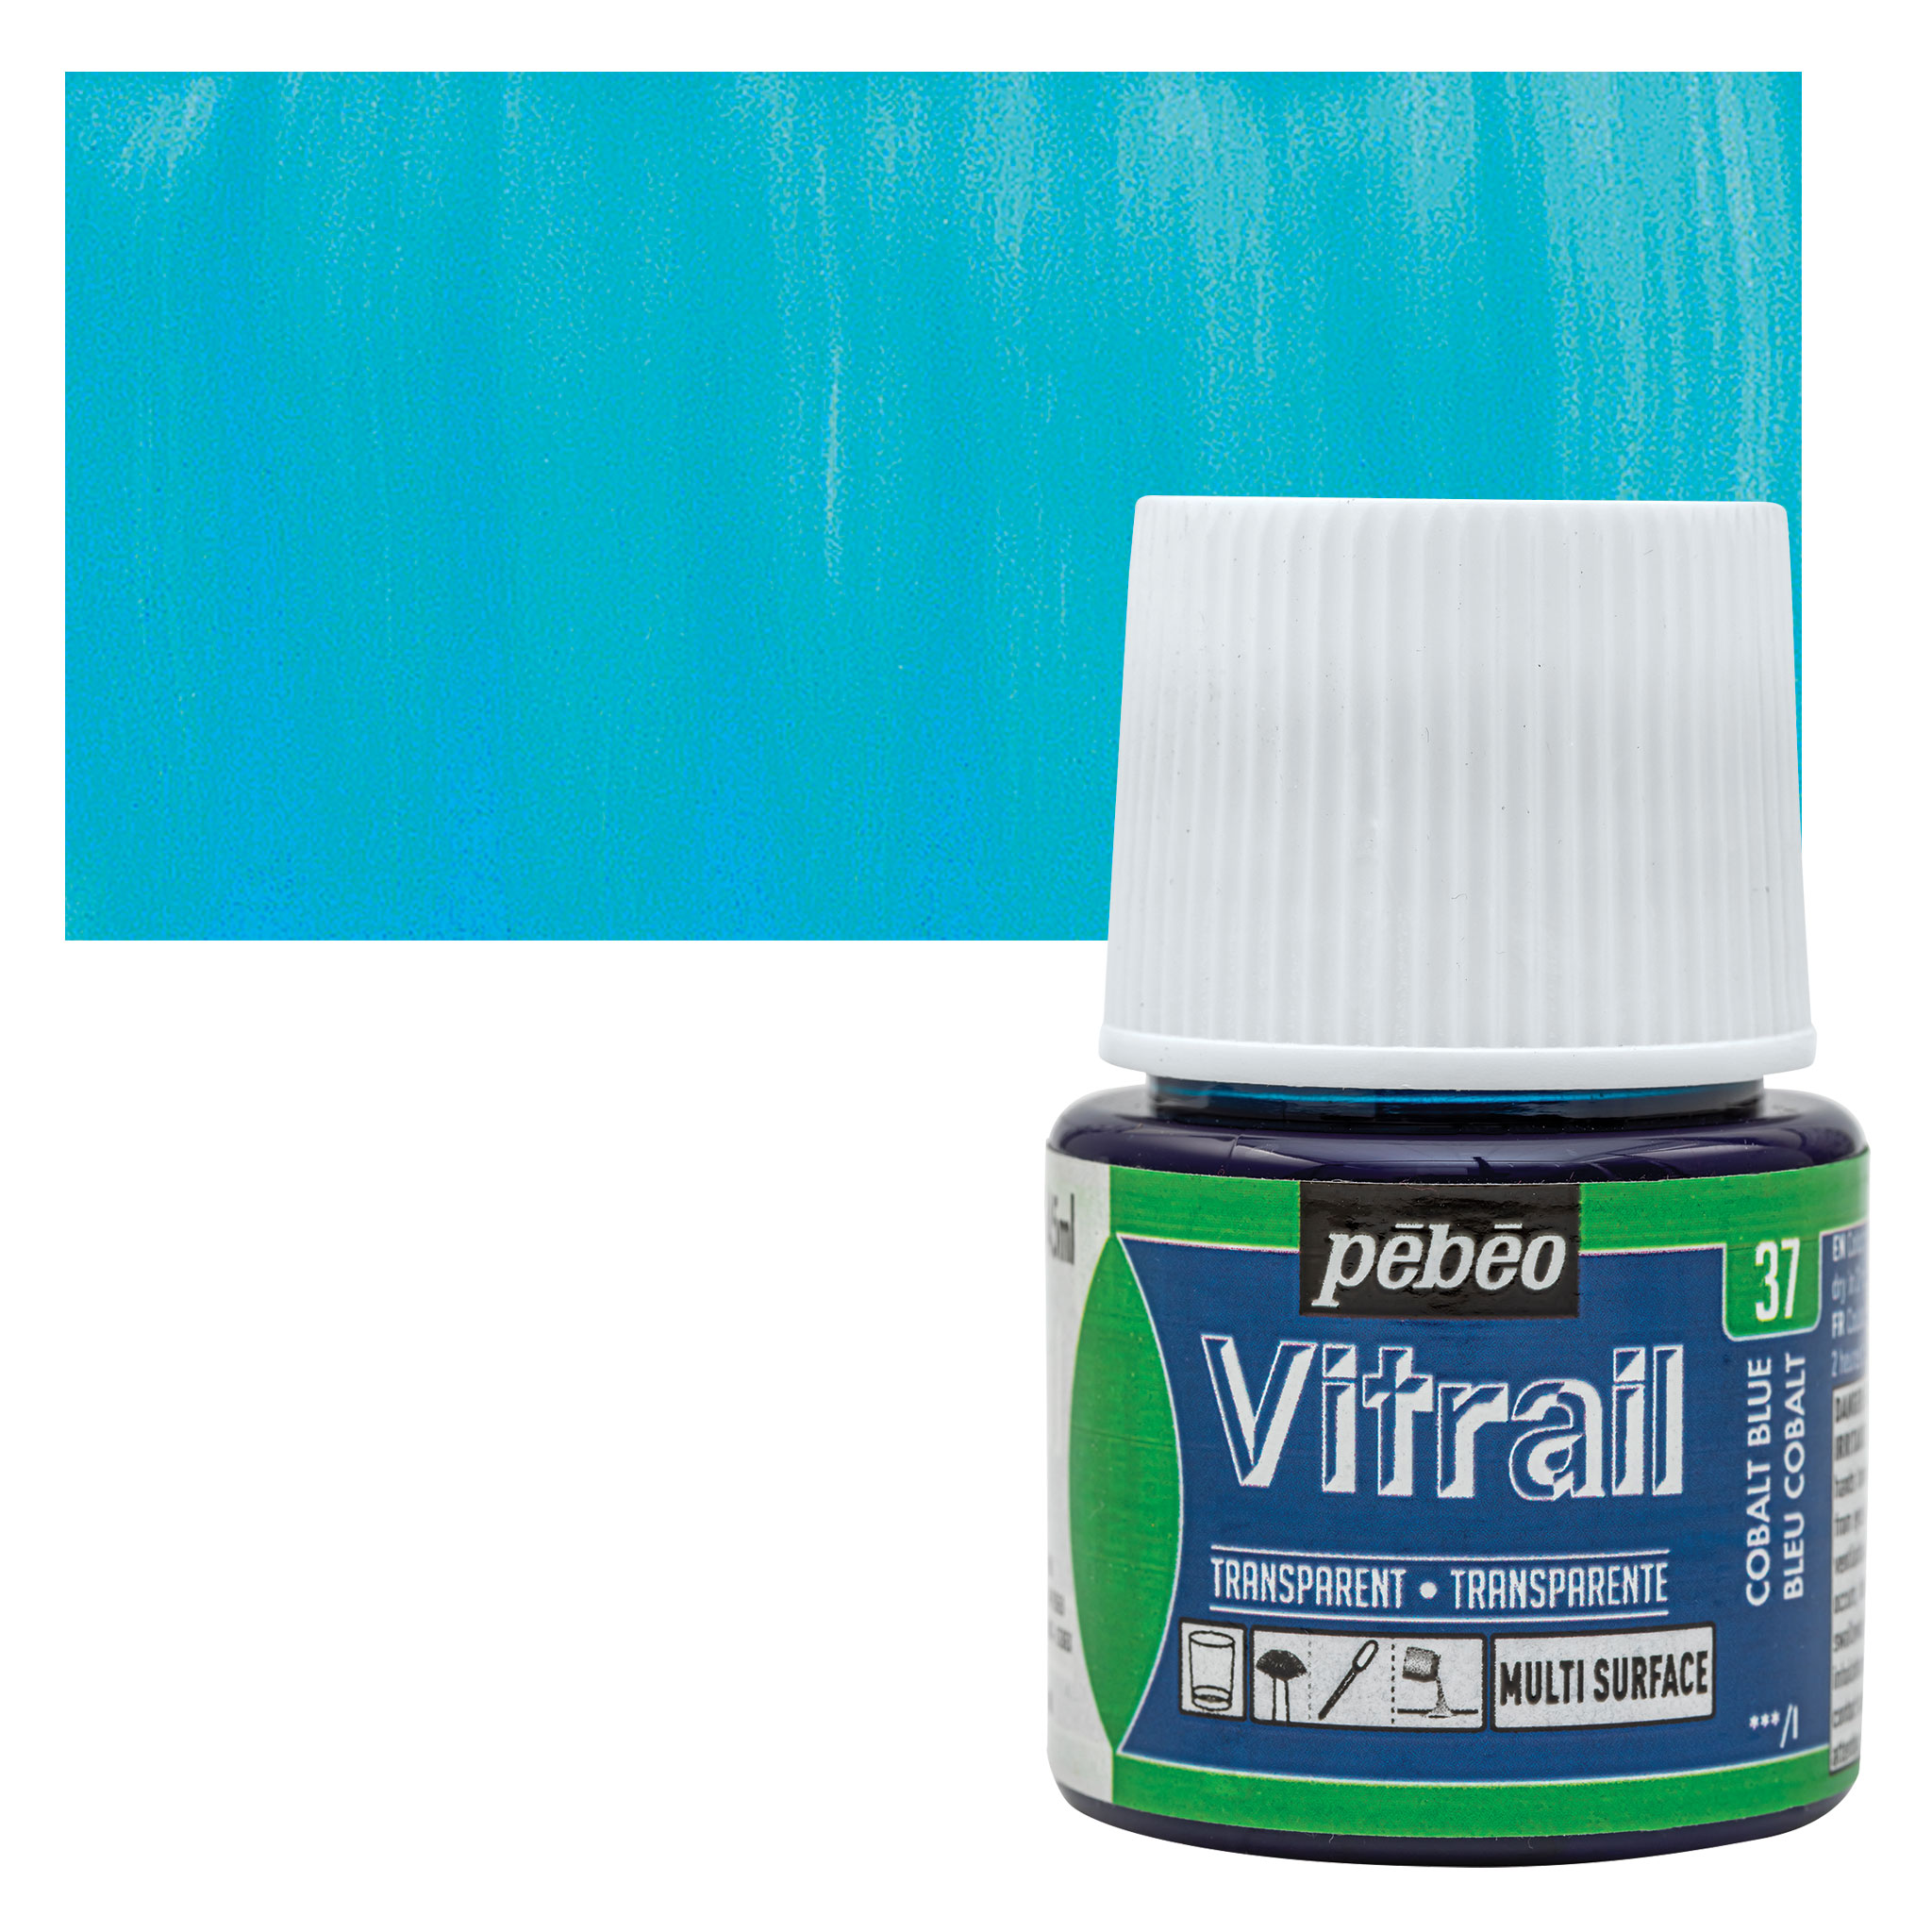 Pebeo Vitrail Paint  BLICK Art Materials